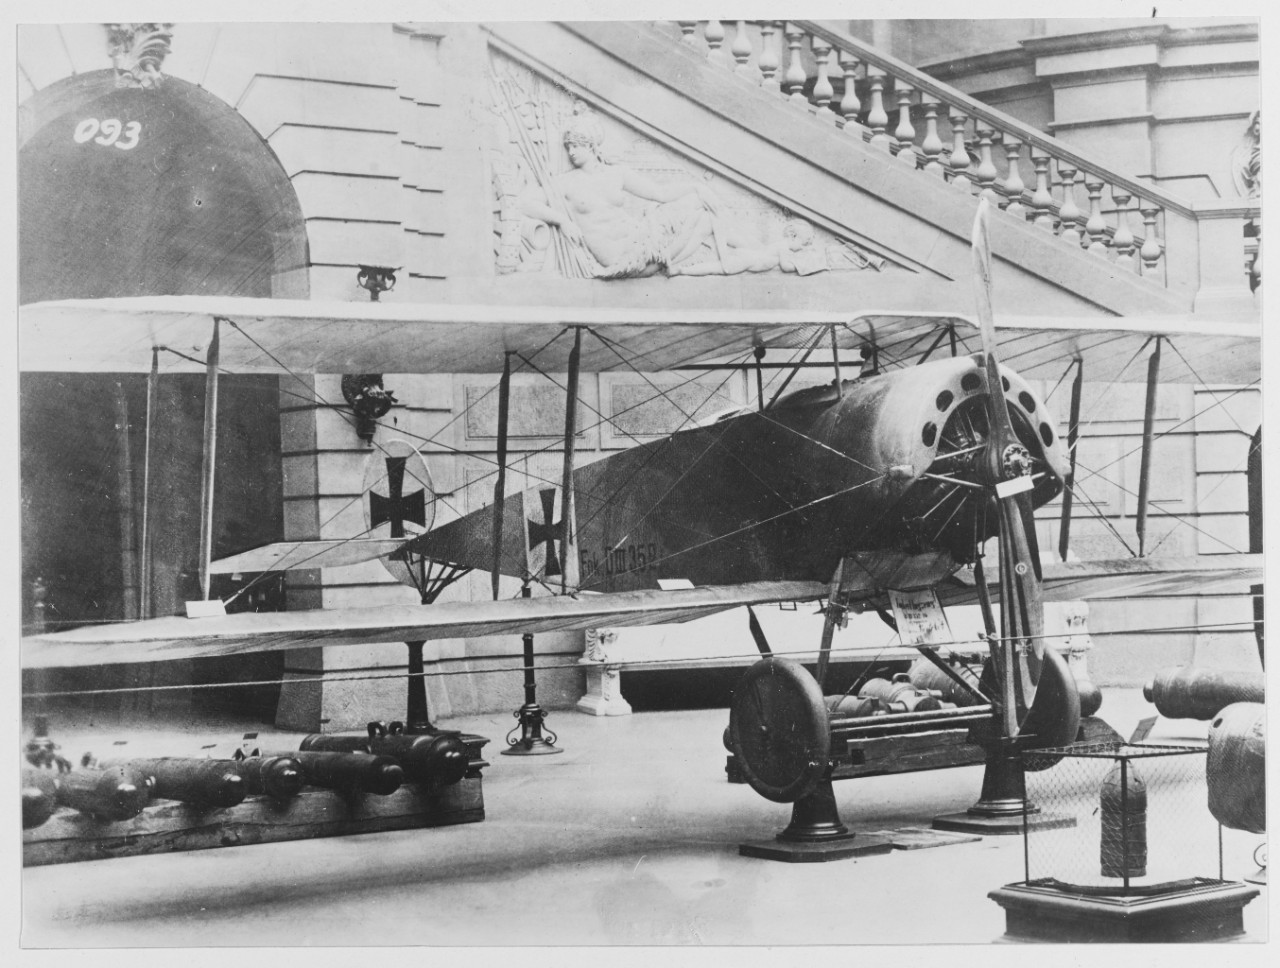 An historic aeroplane.